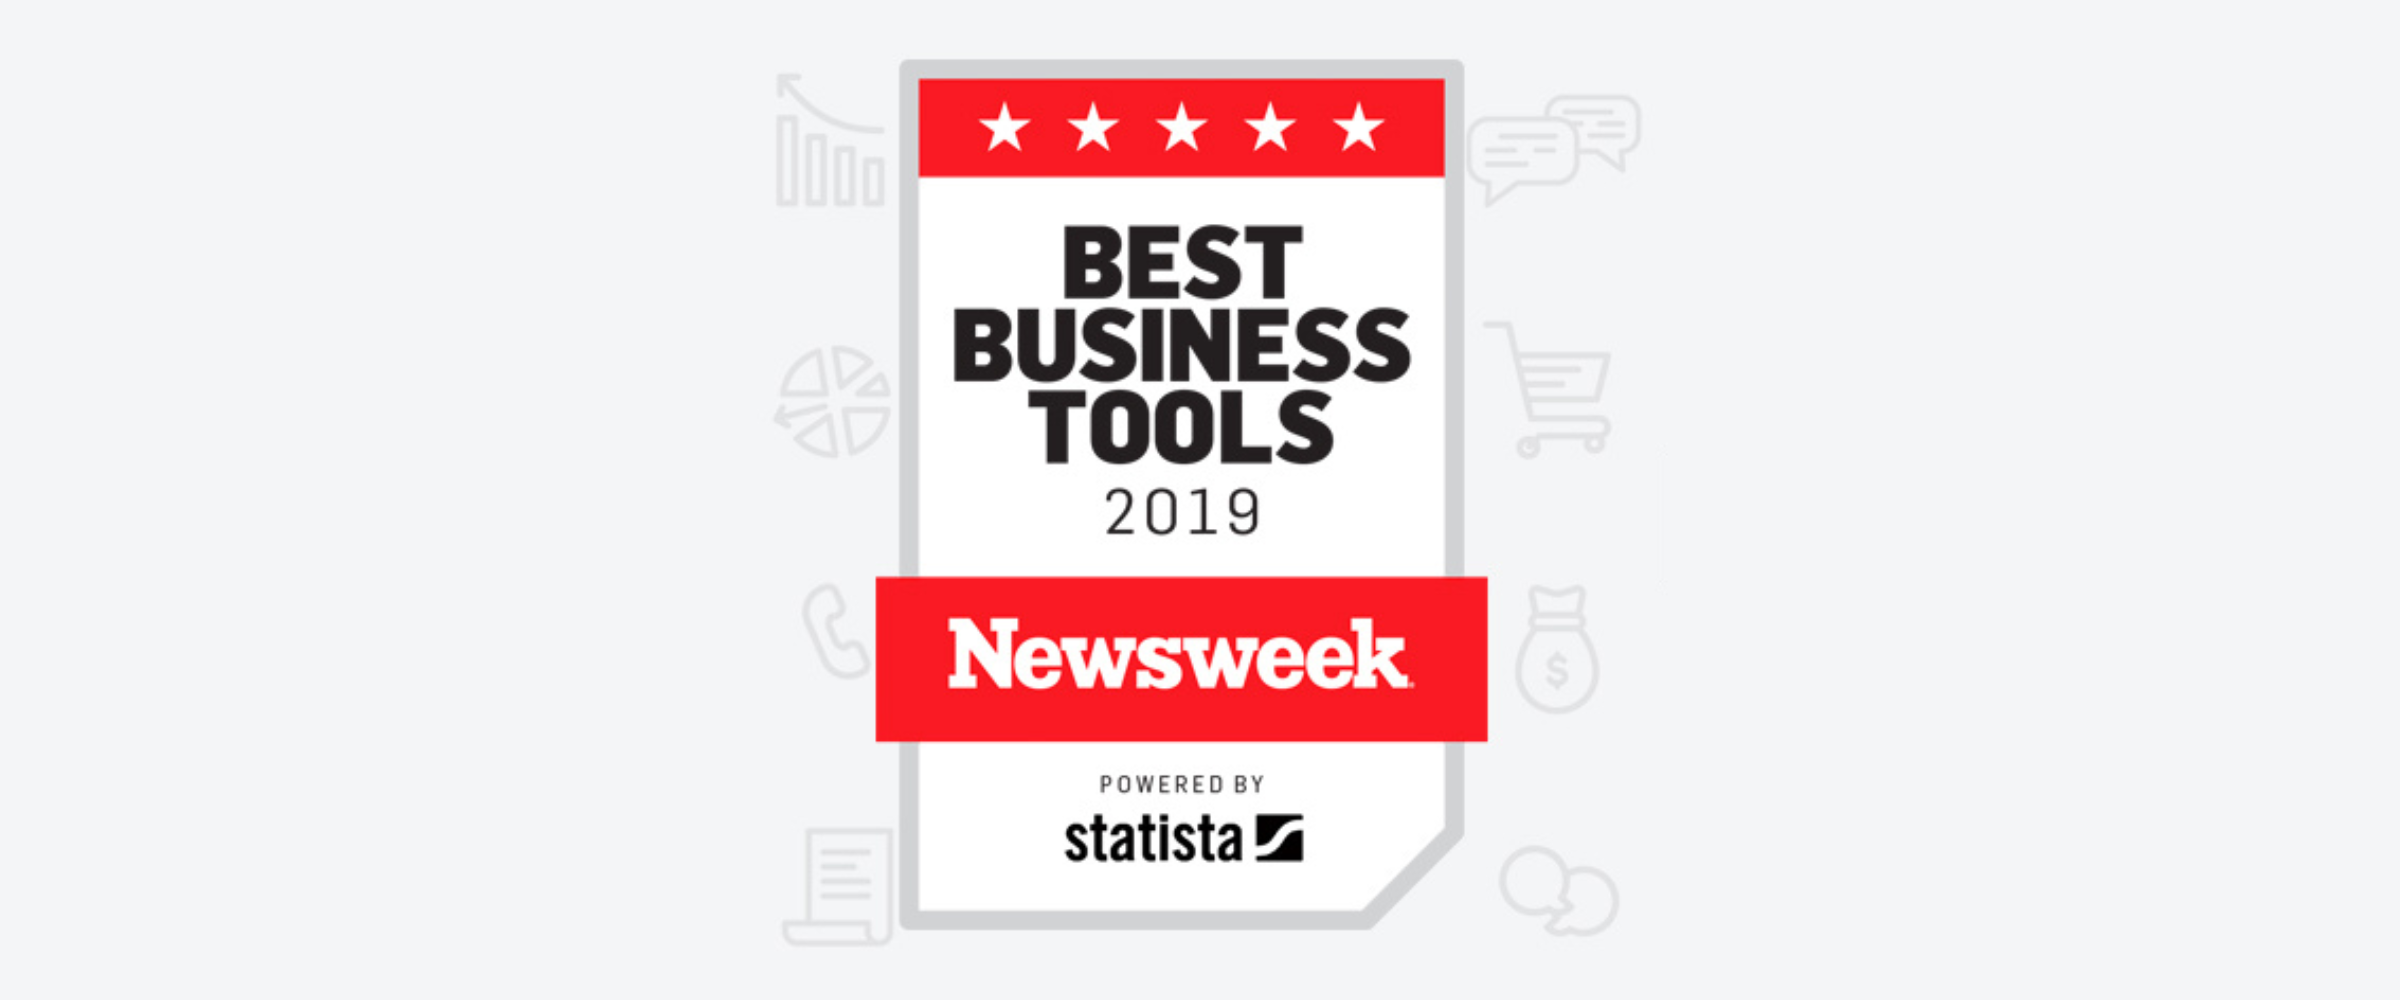 Newsweek Award logo 2019